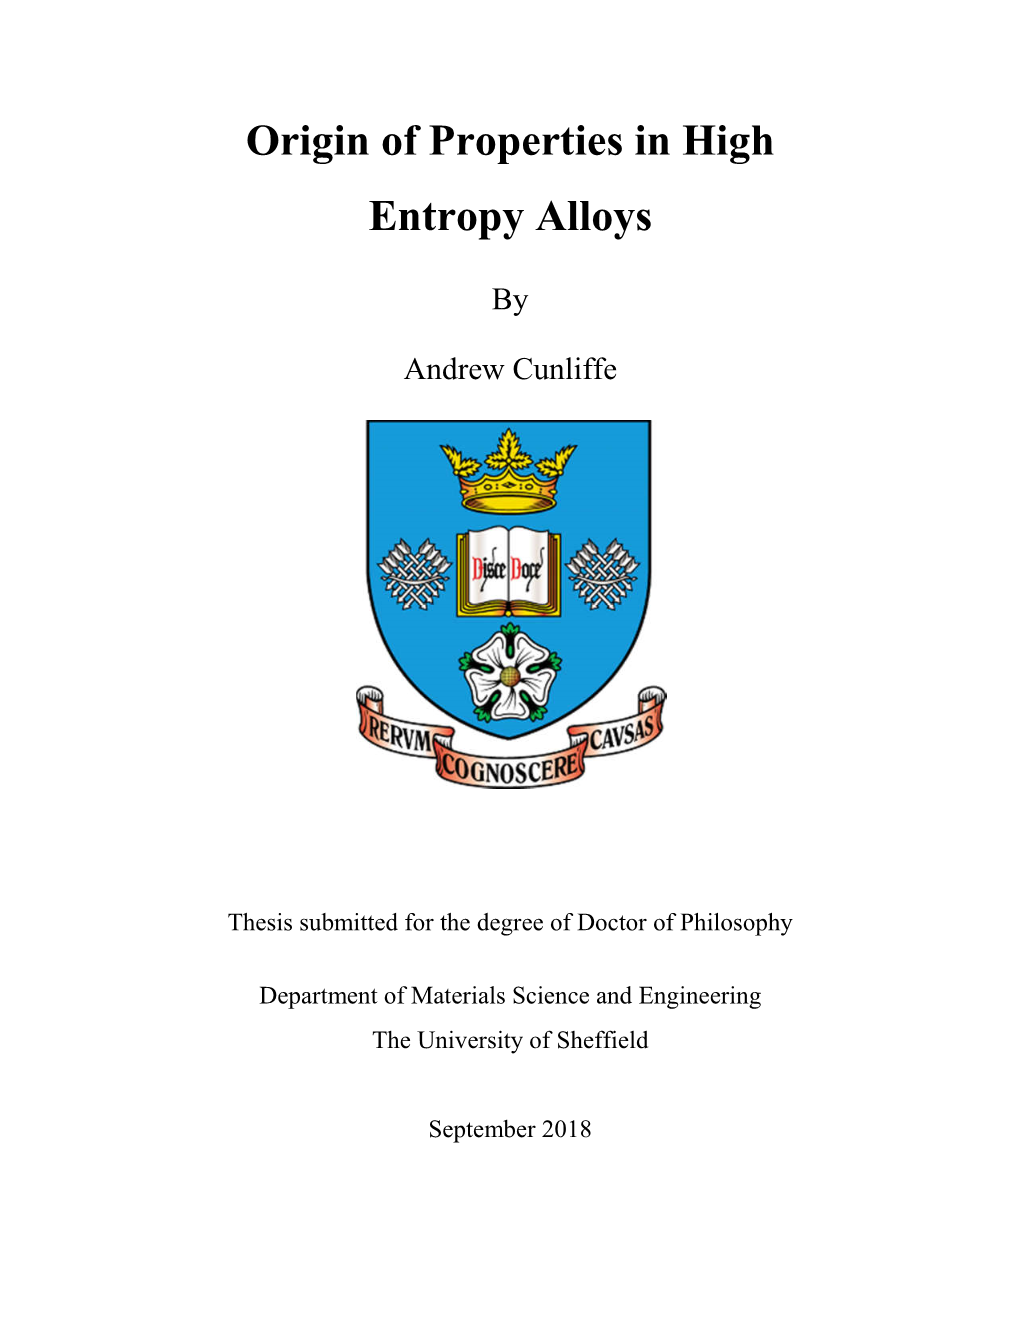 Origin of Properties in High Entropy Alloys